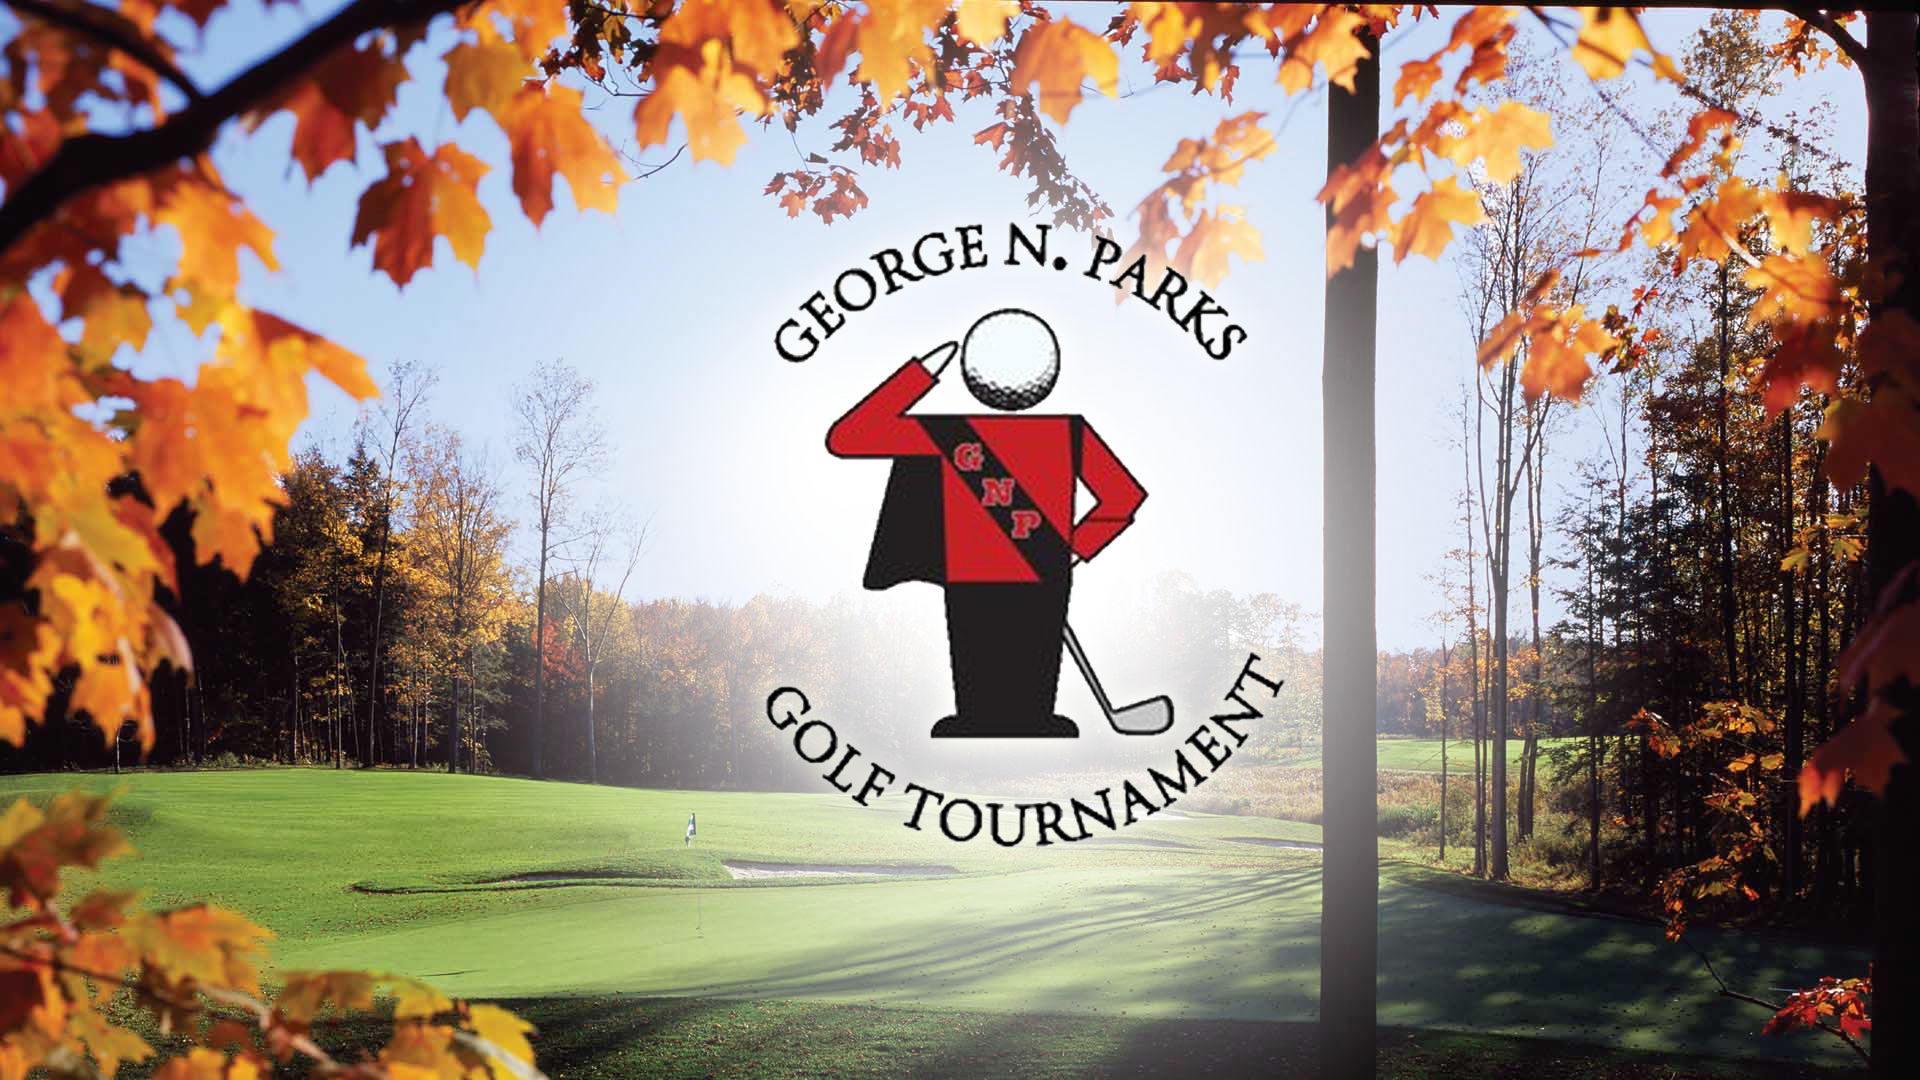 George N. Parks Golf Tournament